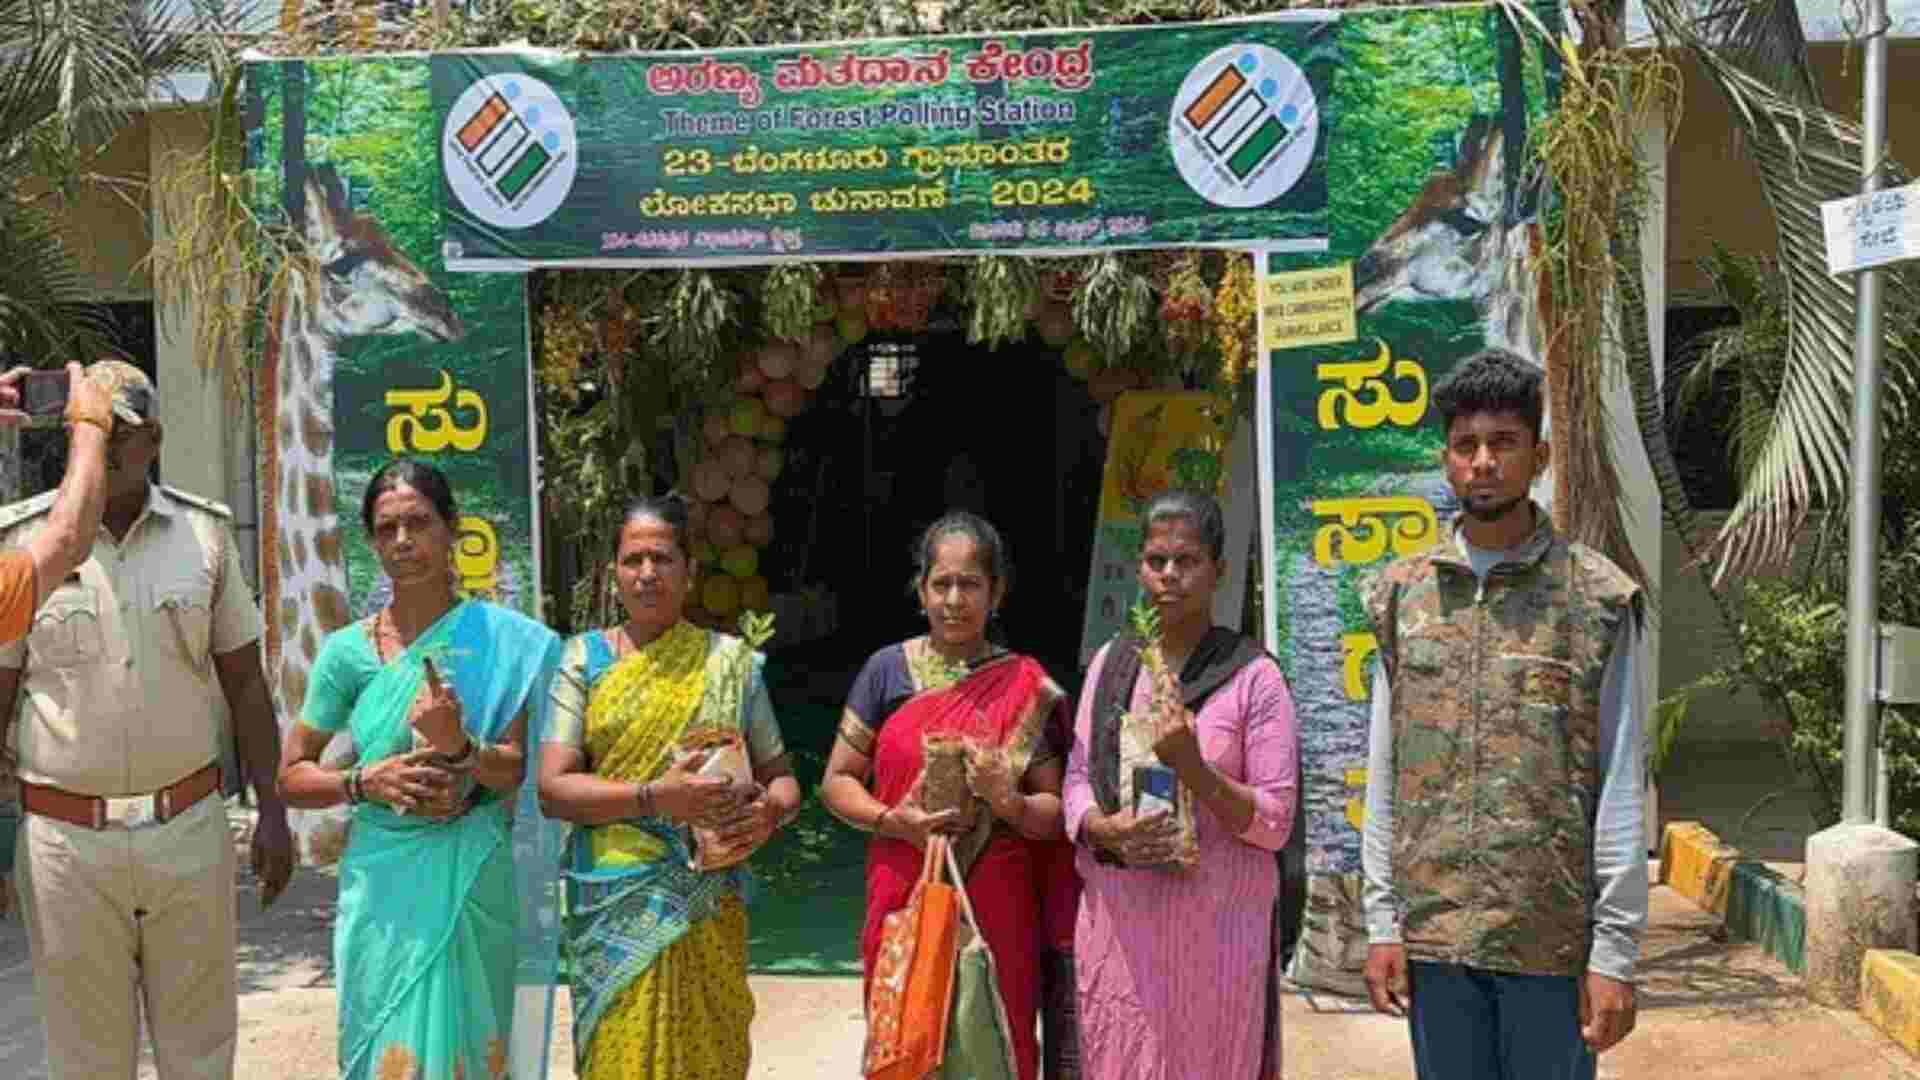 Karnataka: Kanakapura’s forest-themed polling booth set up to promote voter engagement, environmental awareness